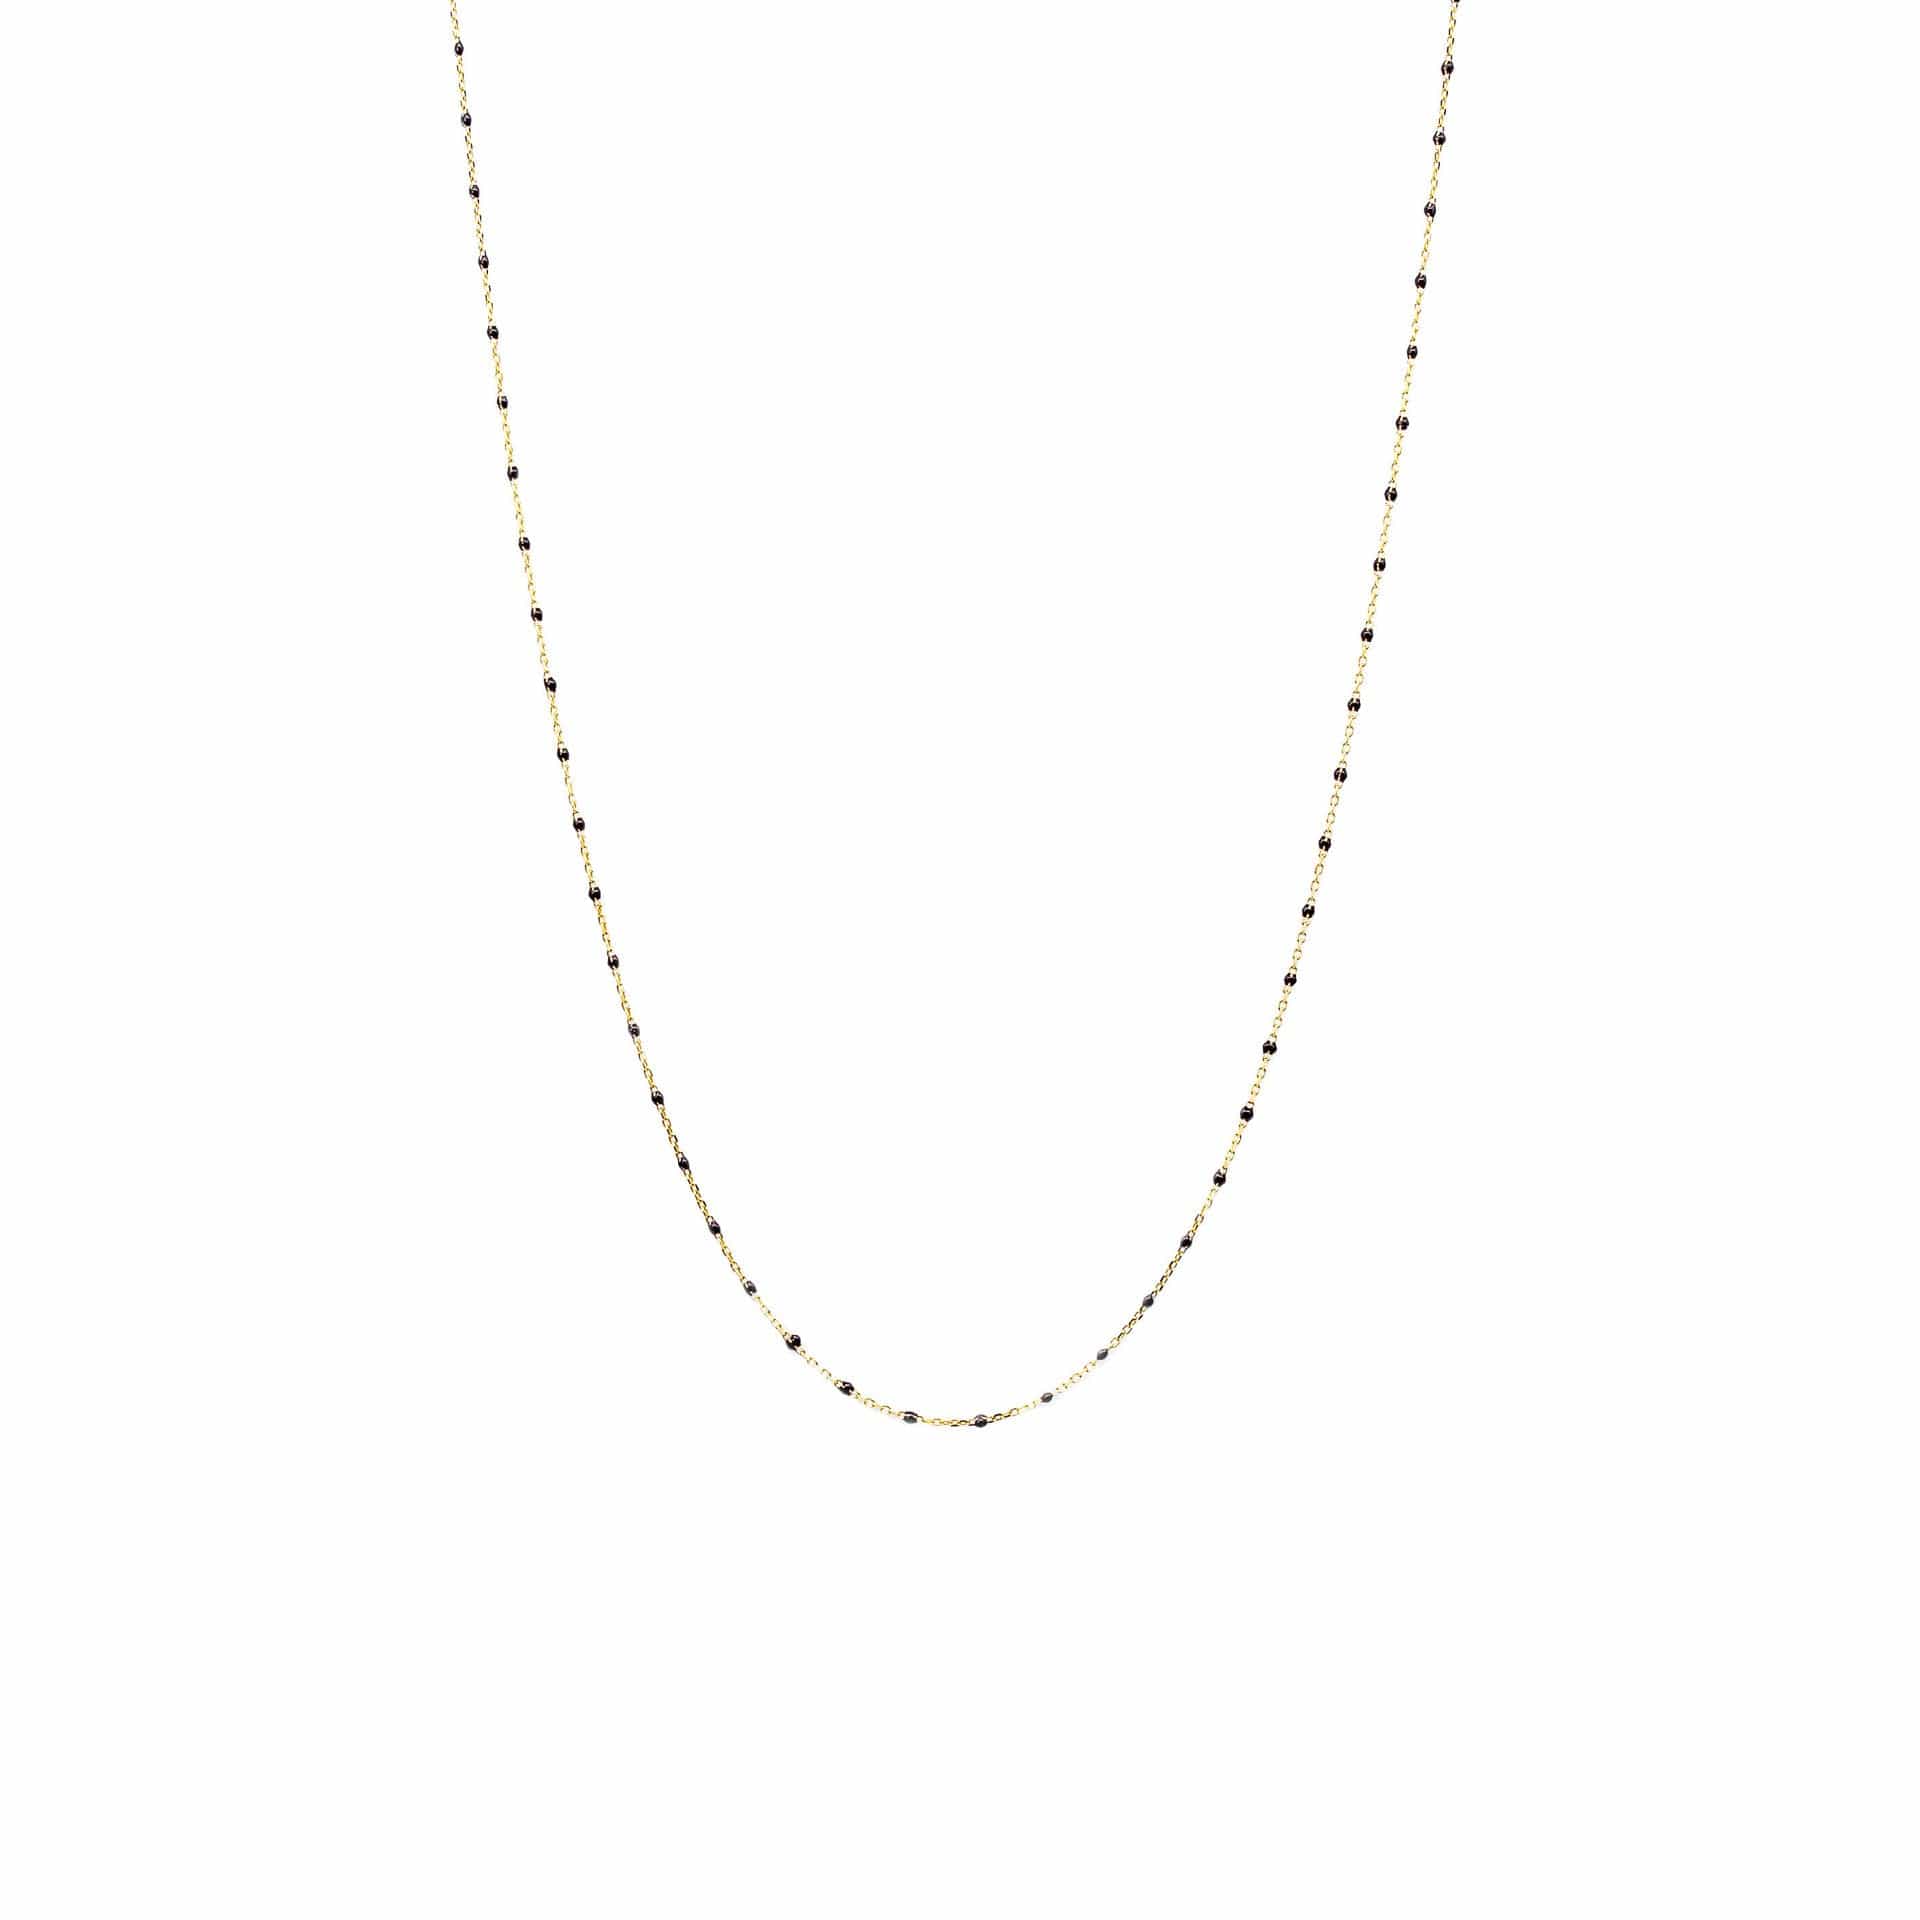 TAI JEWELRY Necklace Gold Vermeil 34" Enamel Beaded Necklace (Black)